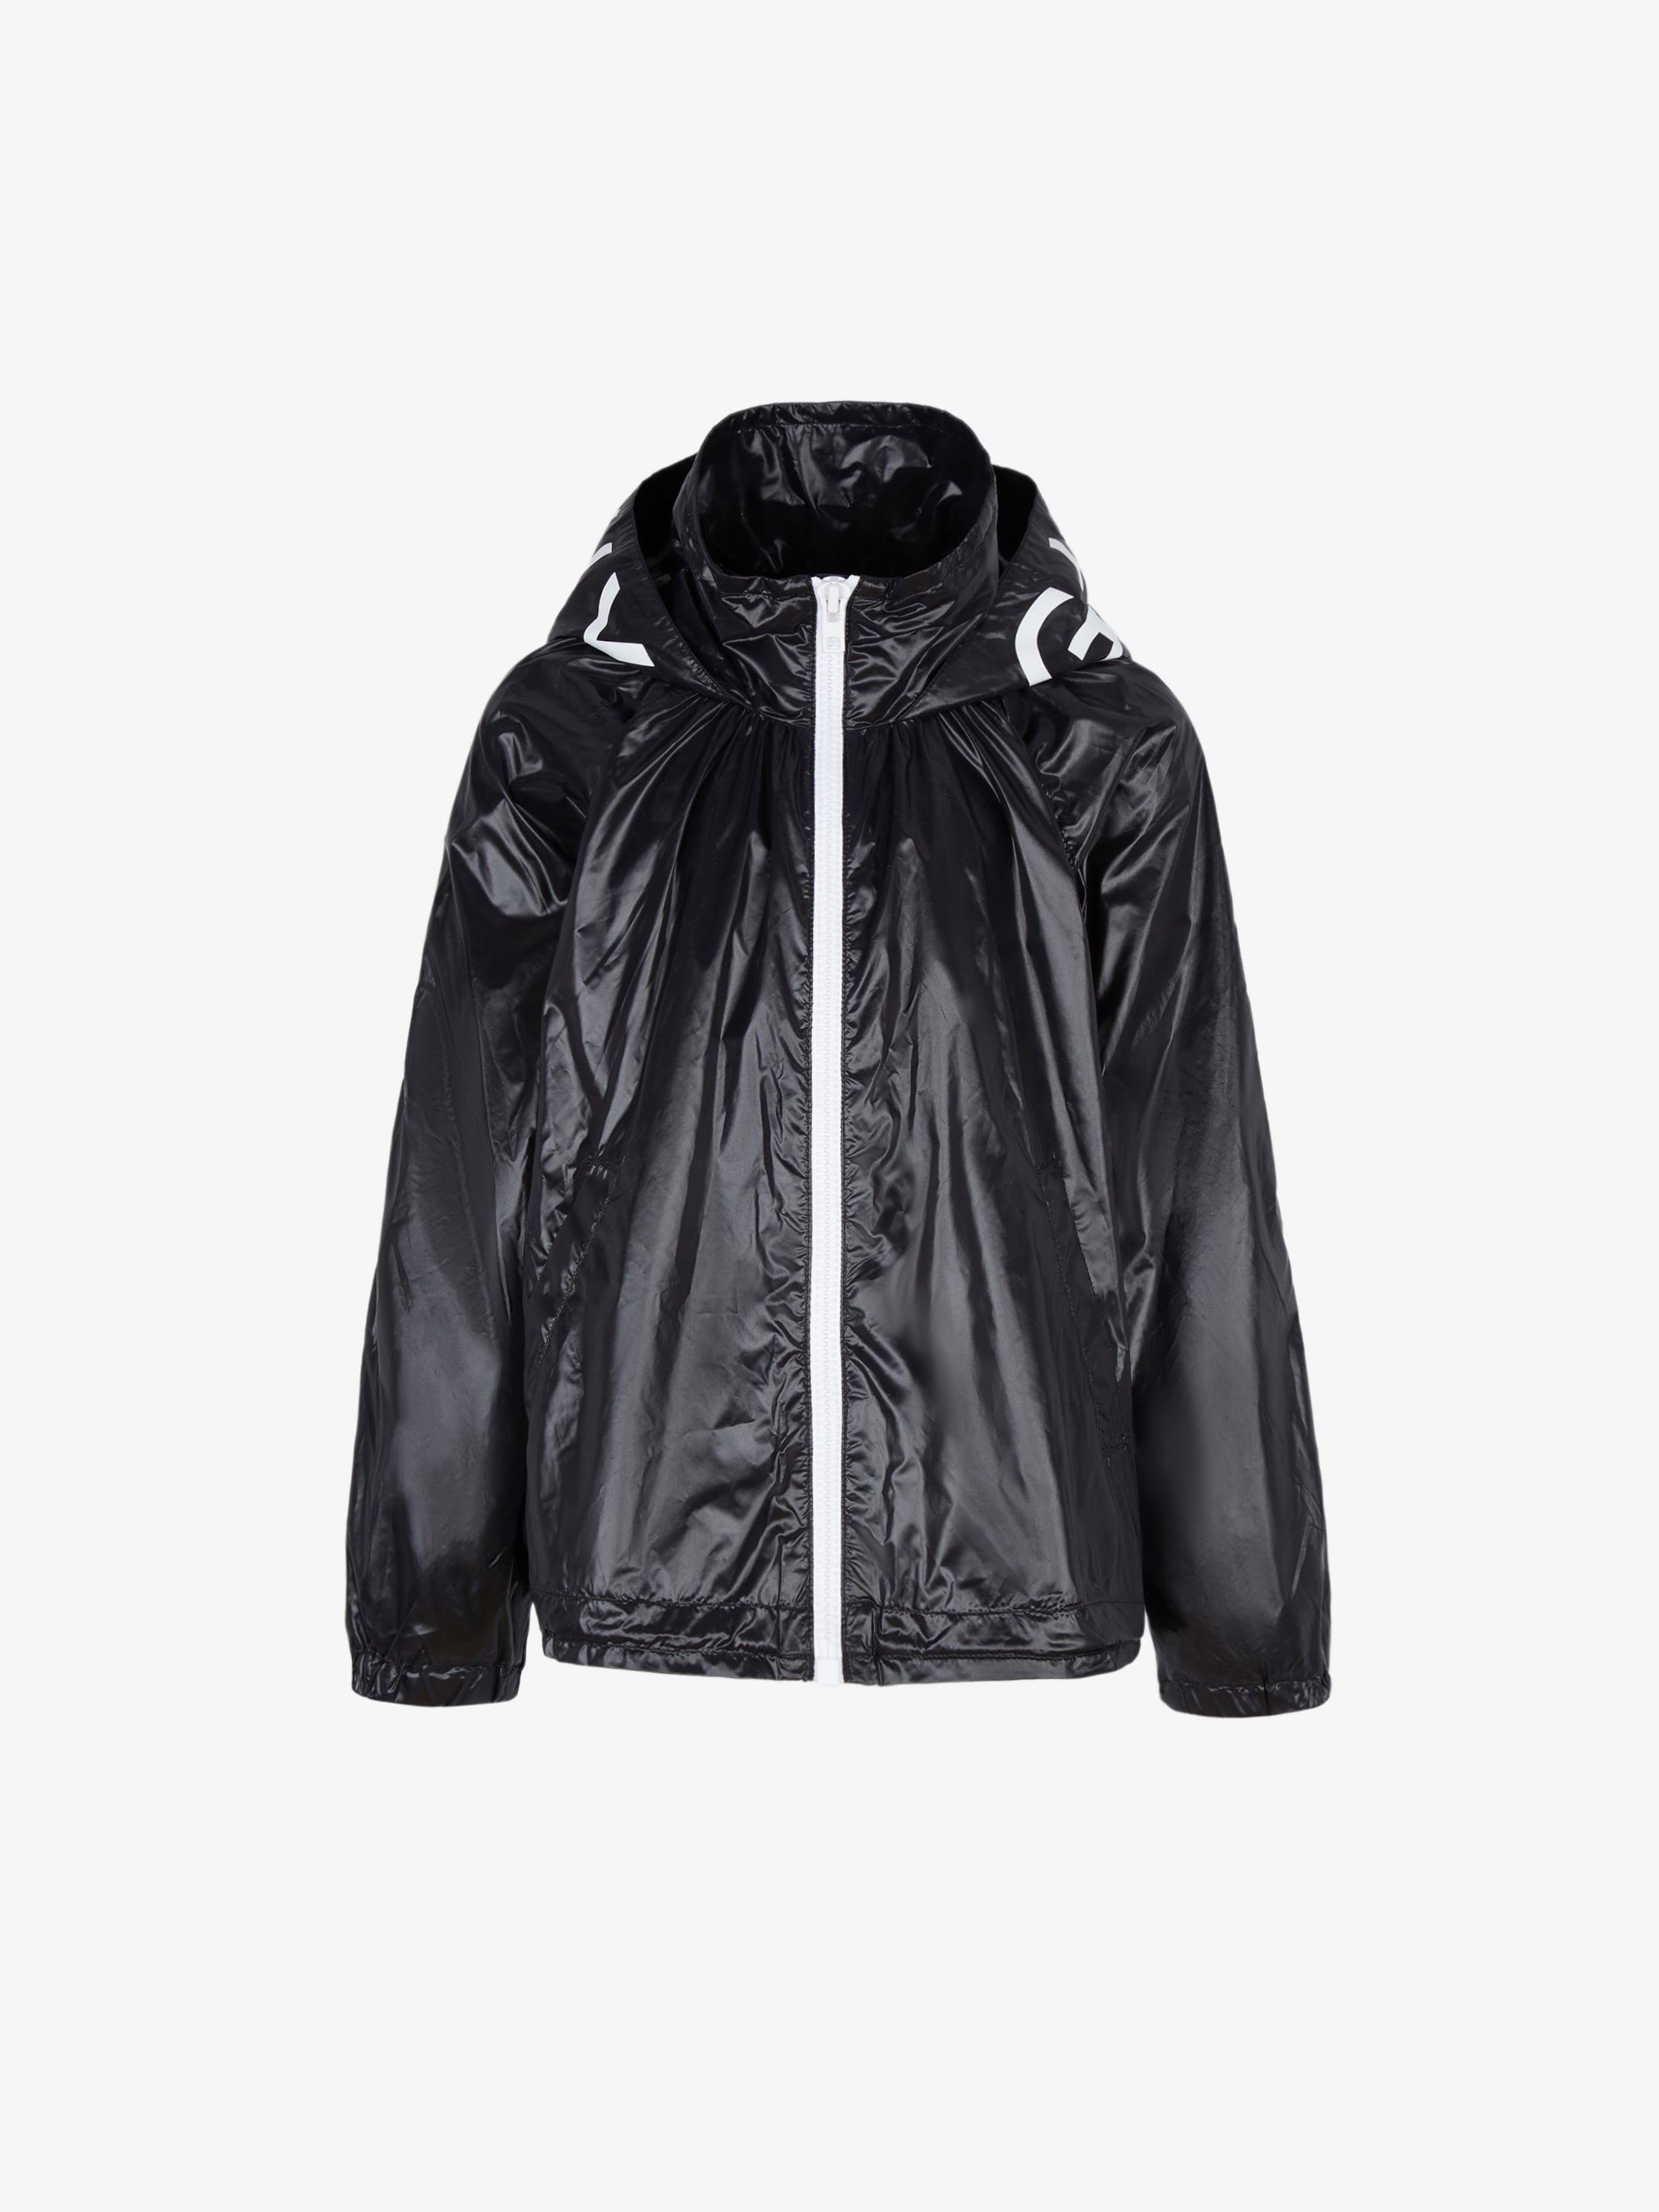 GIVENCHY hooded jacket in nylon | GIVENCHY Paris